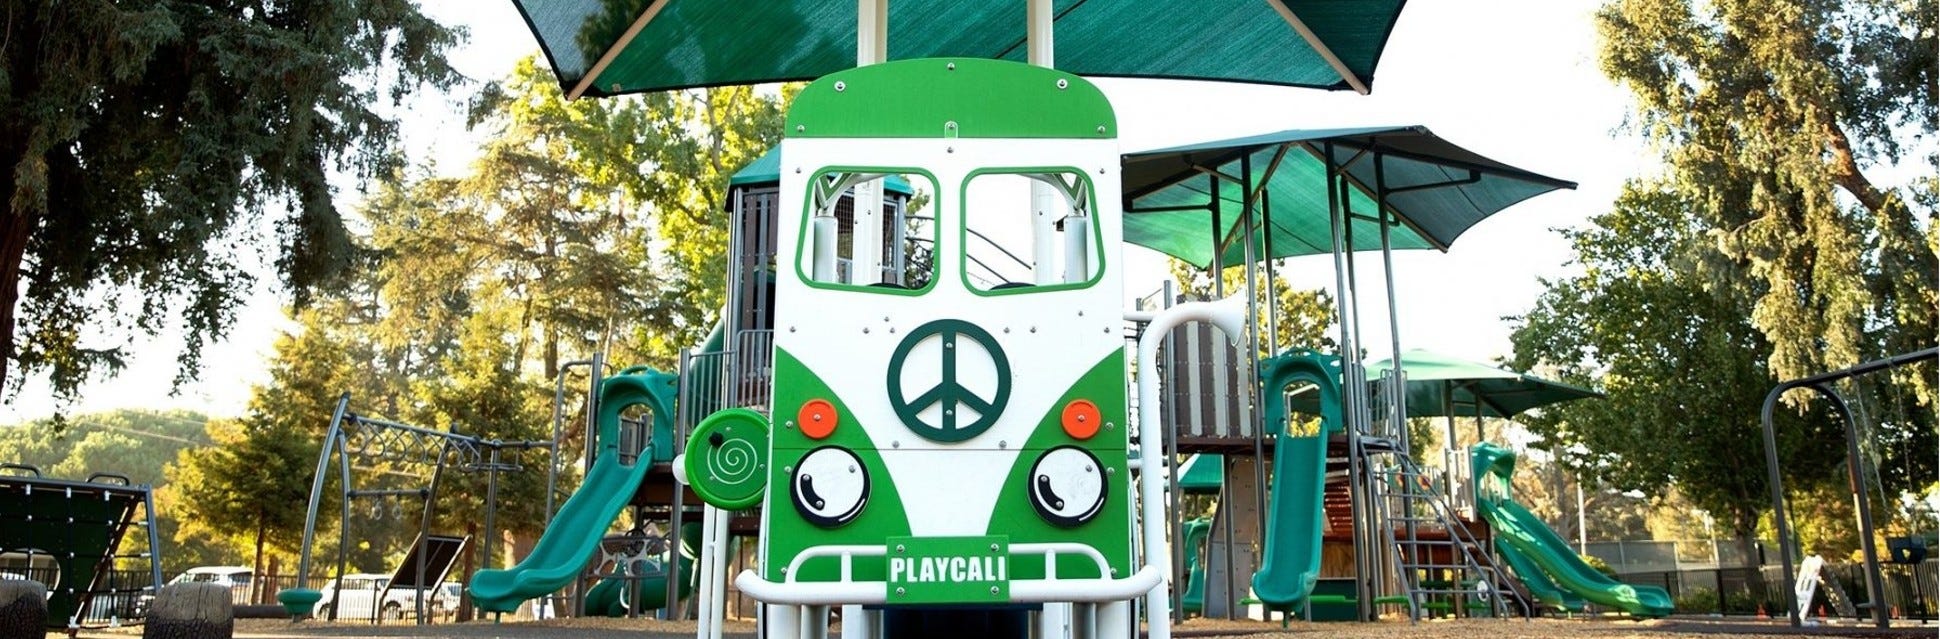 Custom Inclusive Playground Celebrates California Community's Heritage